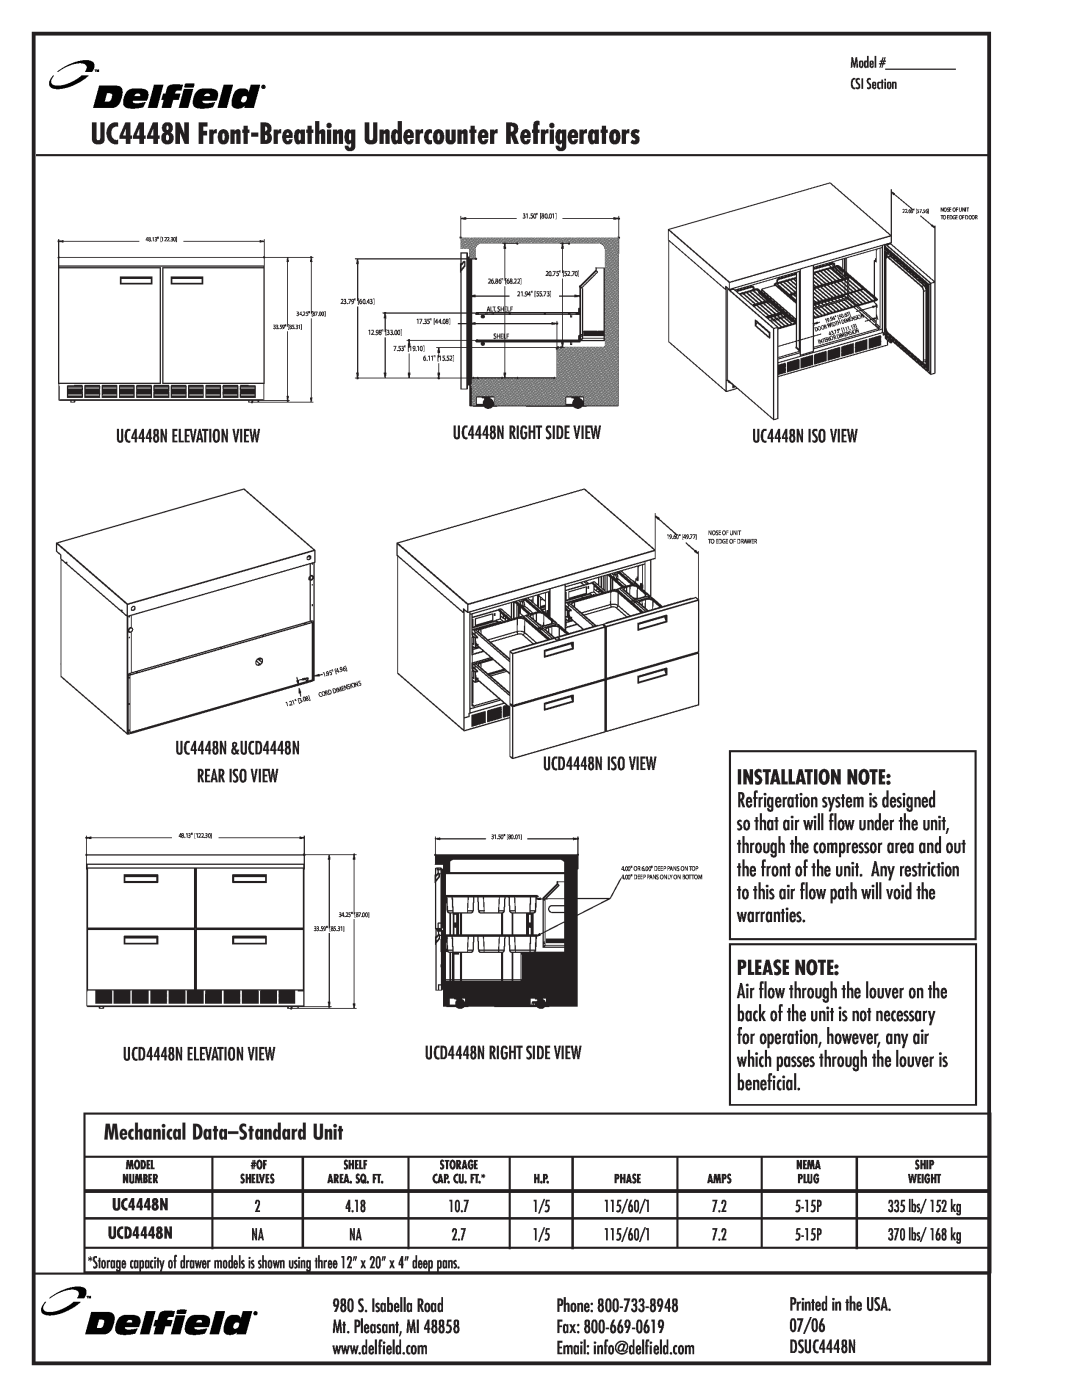 Delfield UCD4448N UC4448N Front-Breathing Undercounter Refrigerators, Mechanical Data-Standard Unit, Please Note 